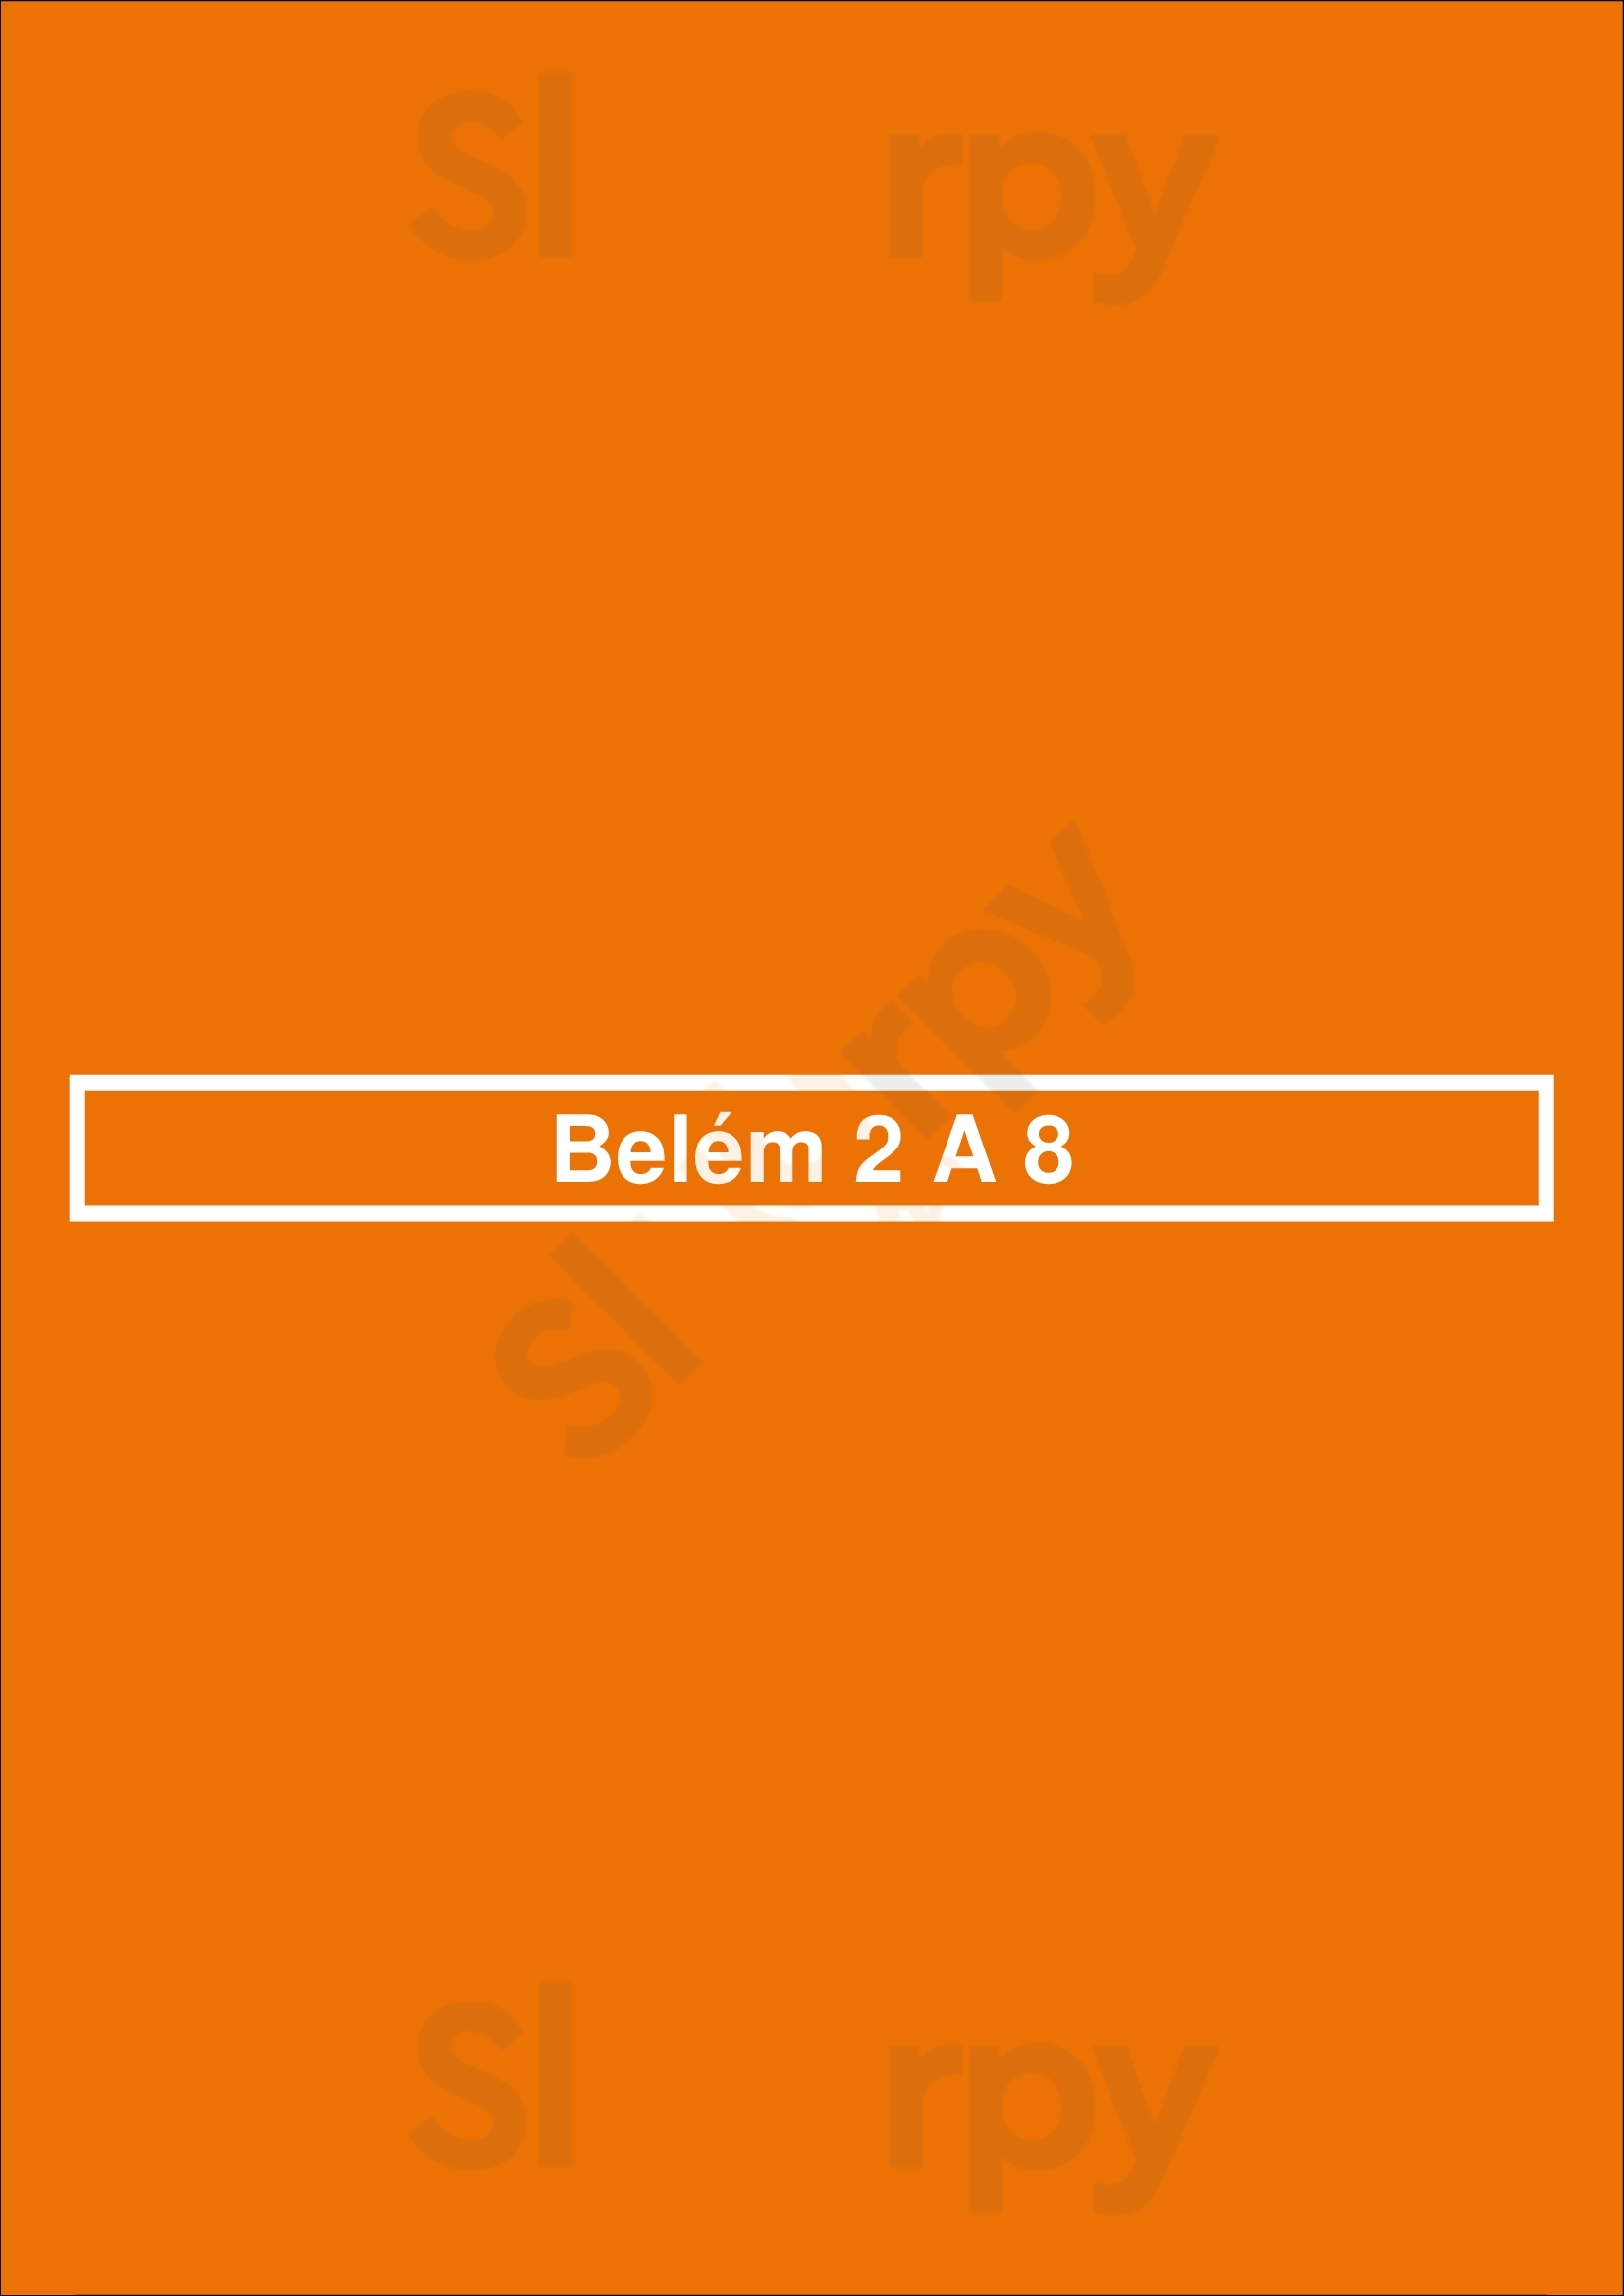 Belém 2 A 8 Lisboa Menu - 1